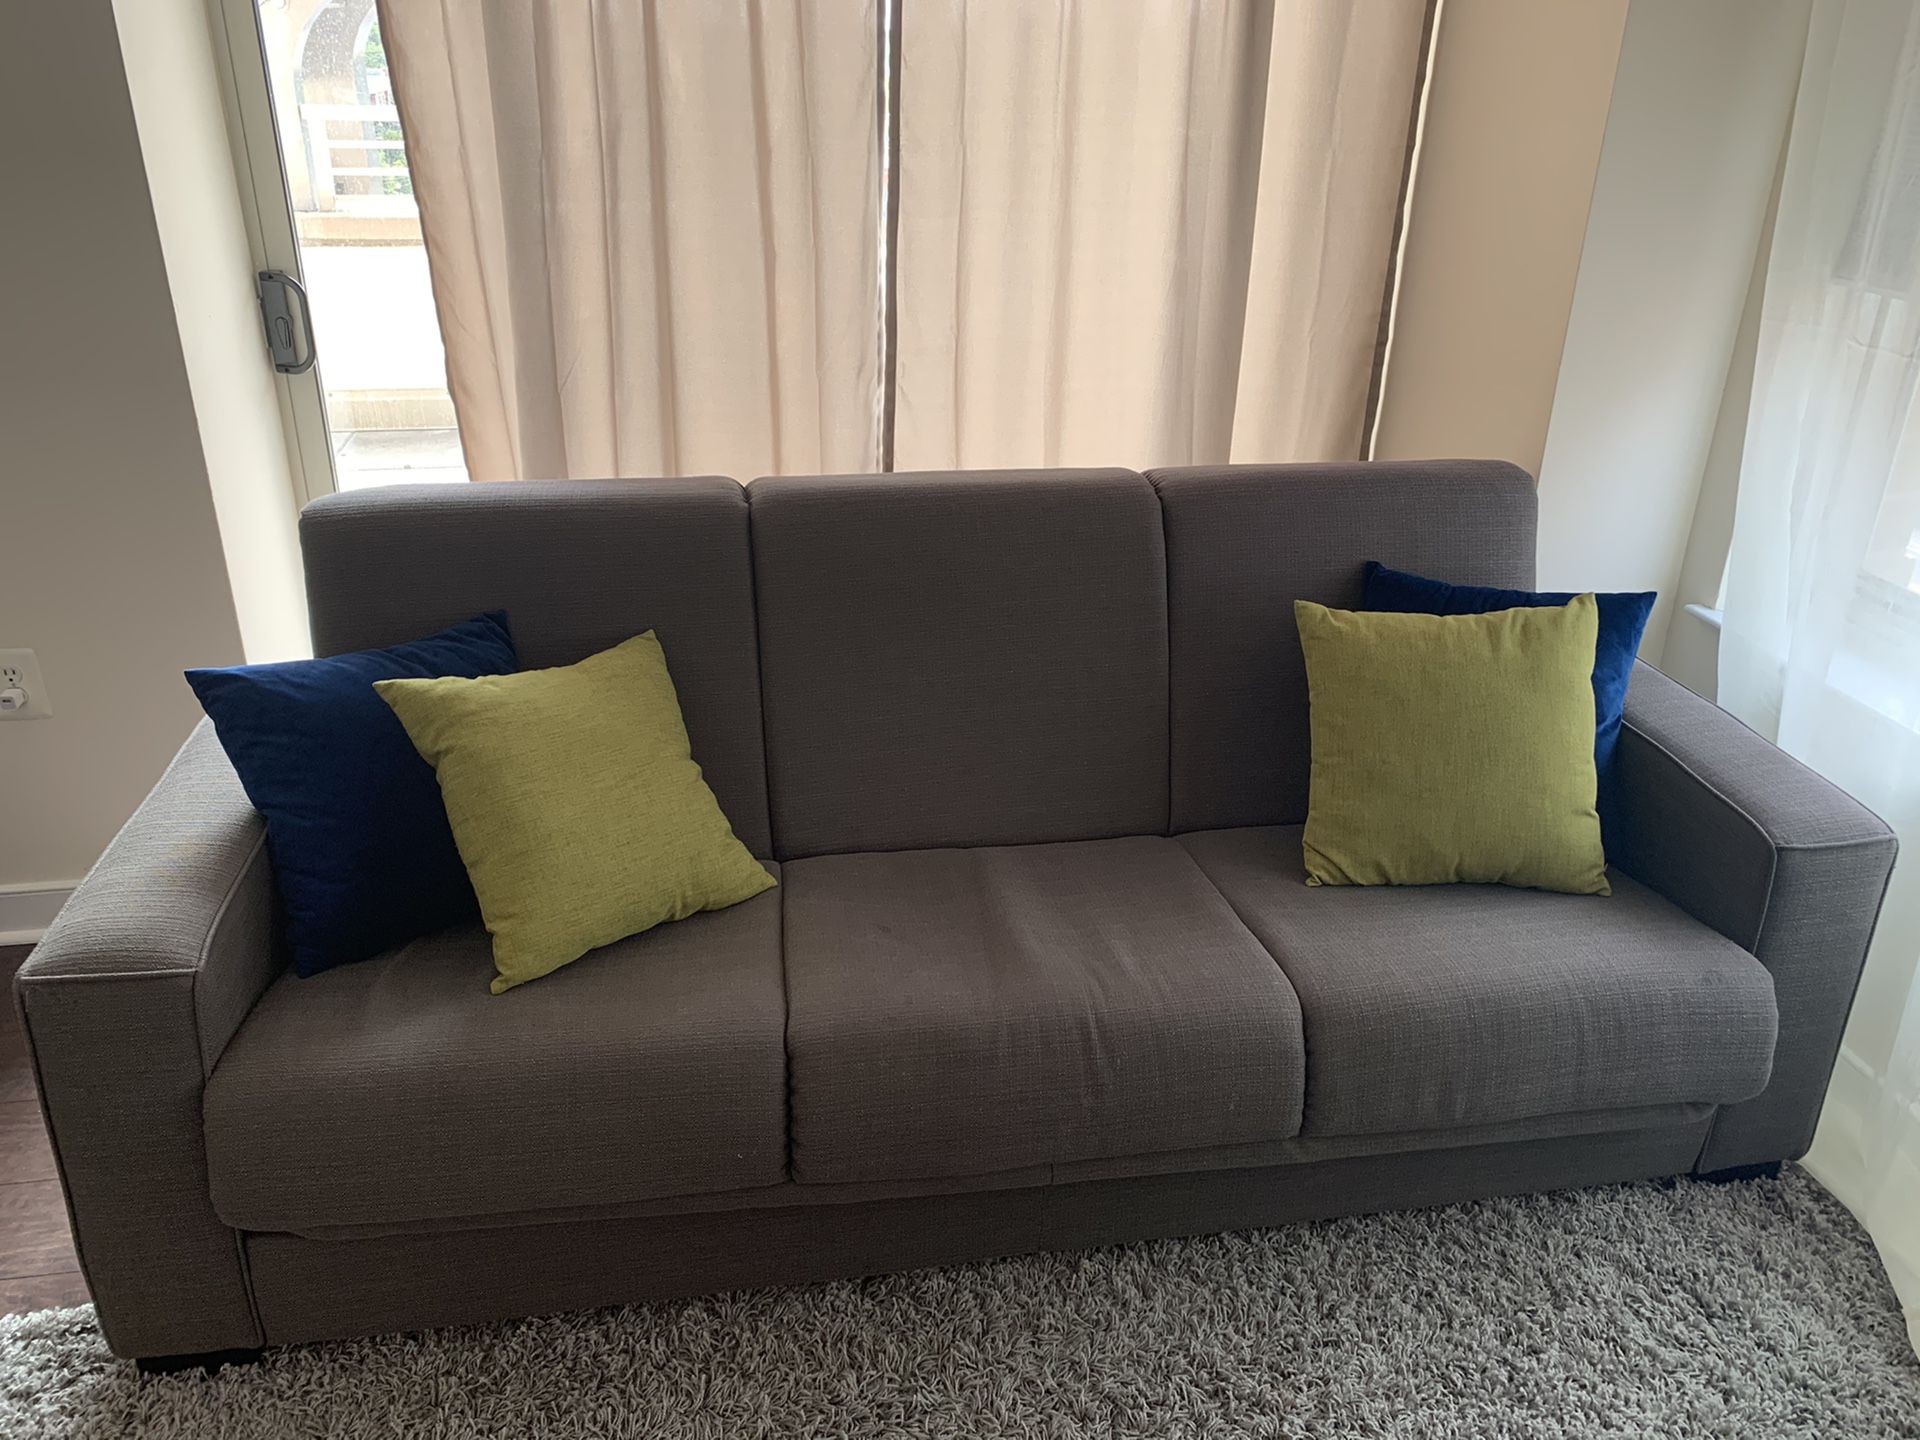 Comfortable, affordable sleeper sofa!